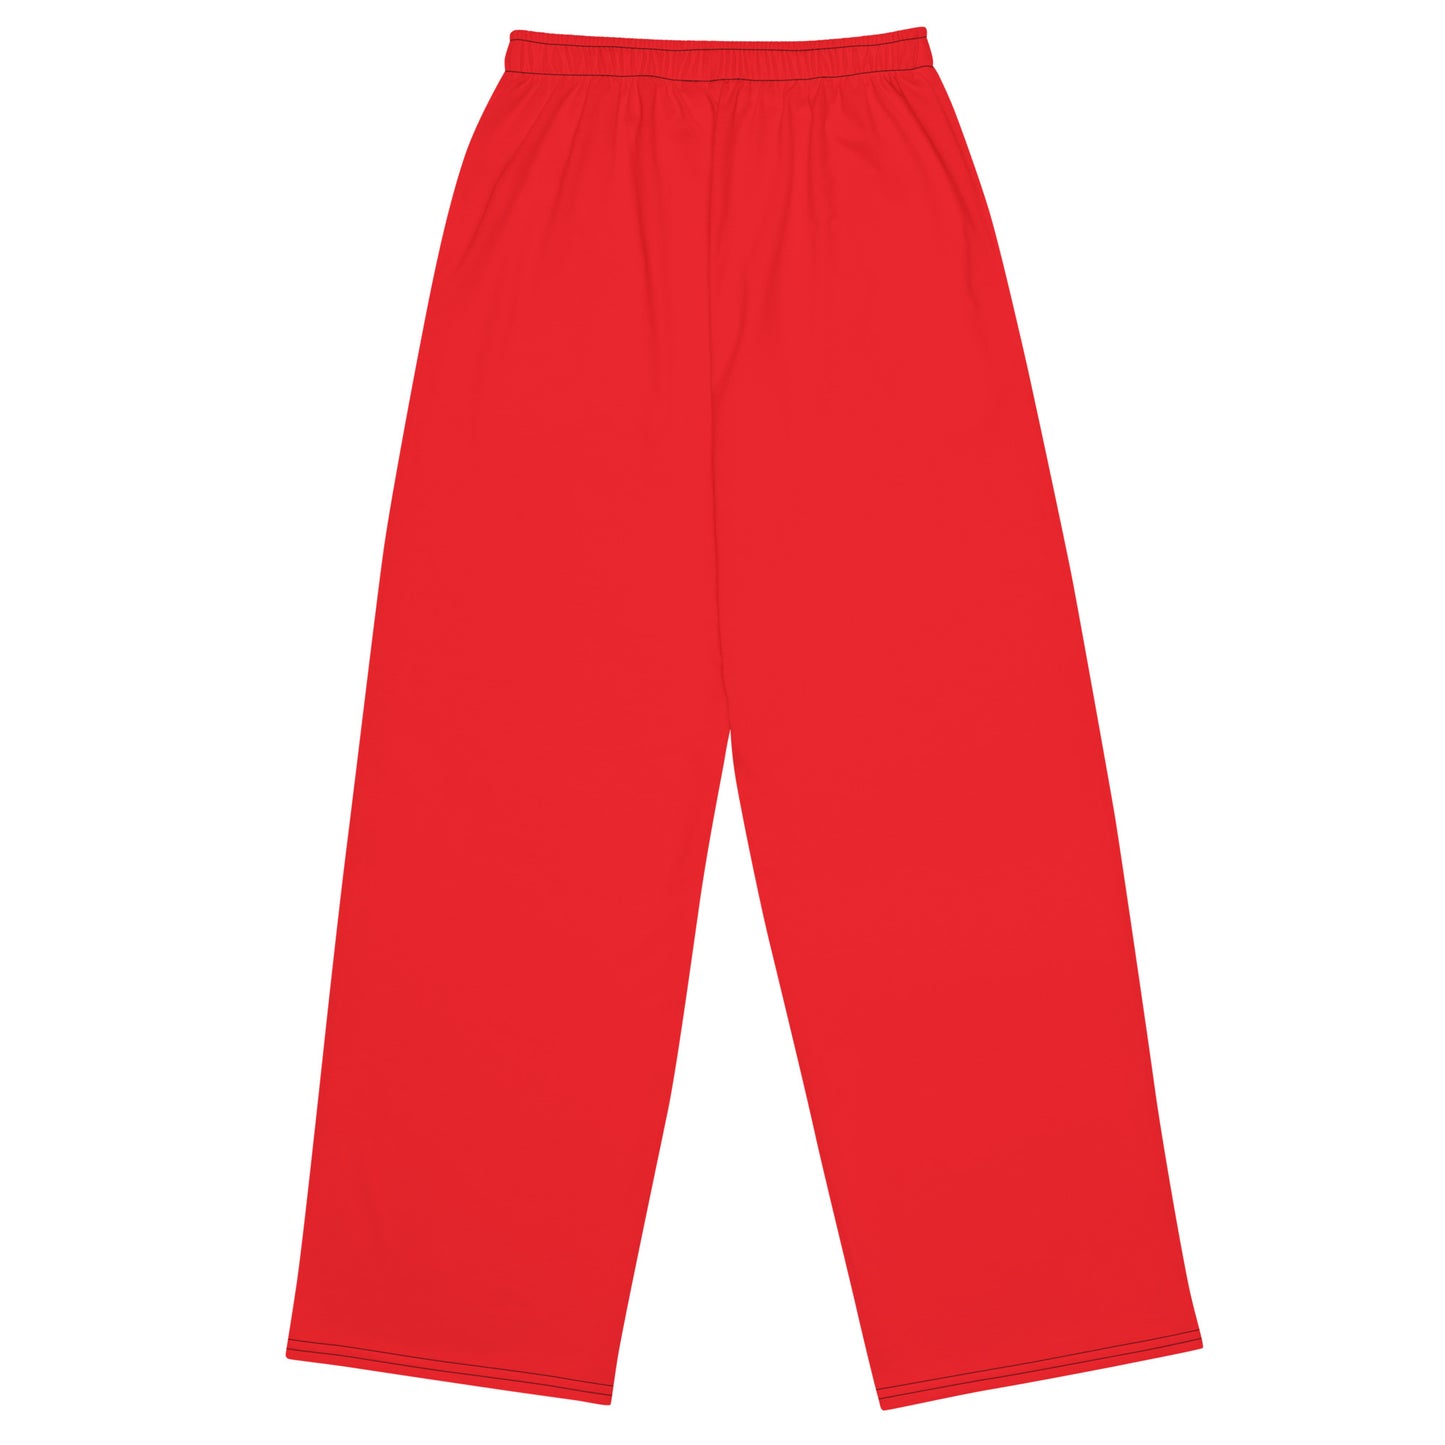 Red wide-leg pants